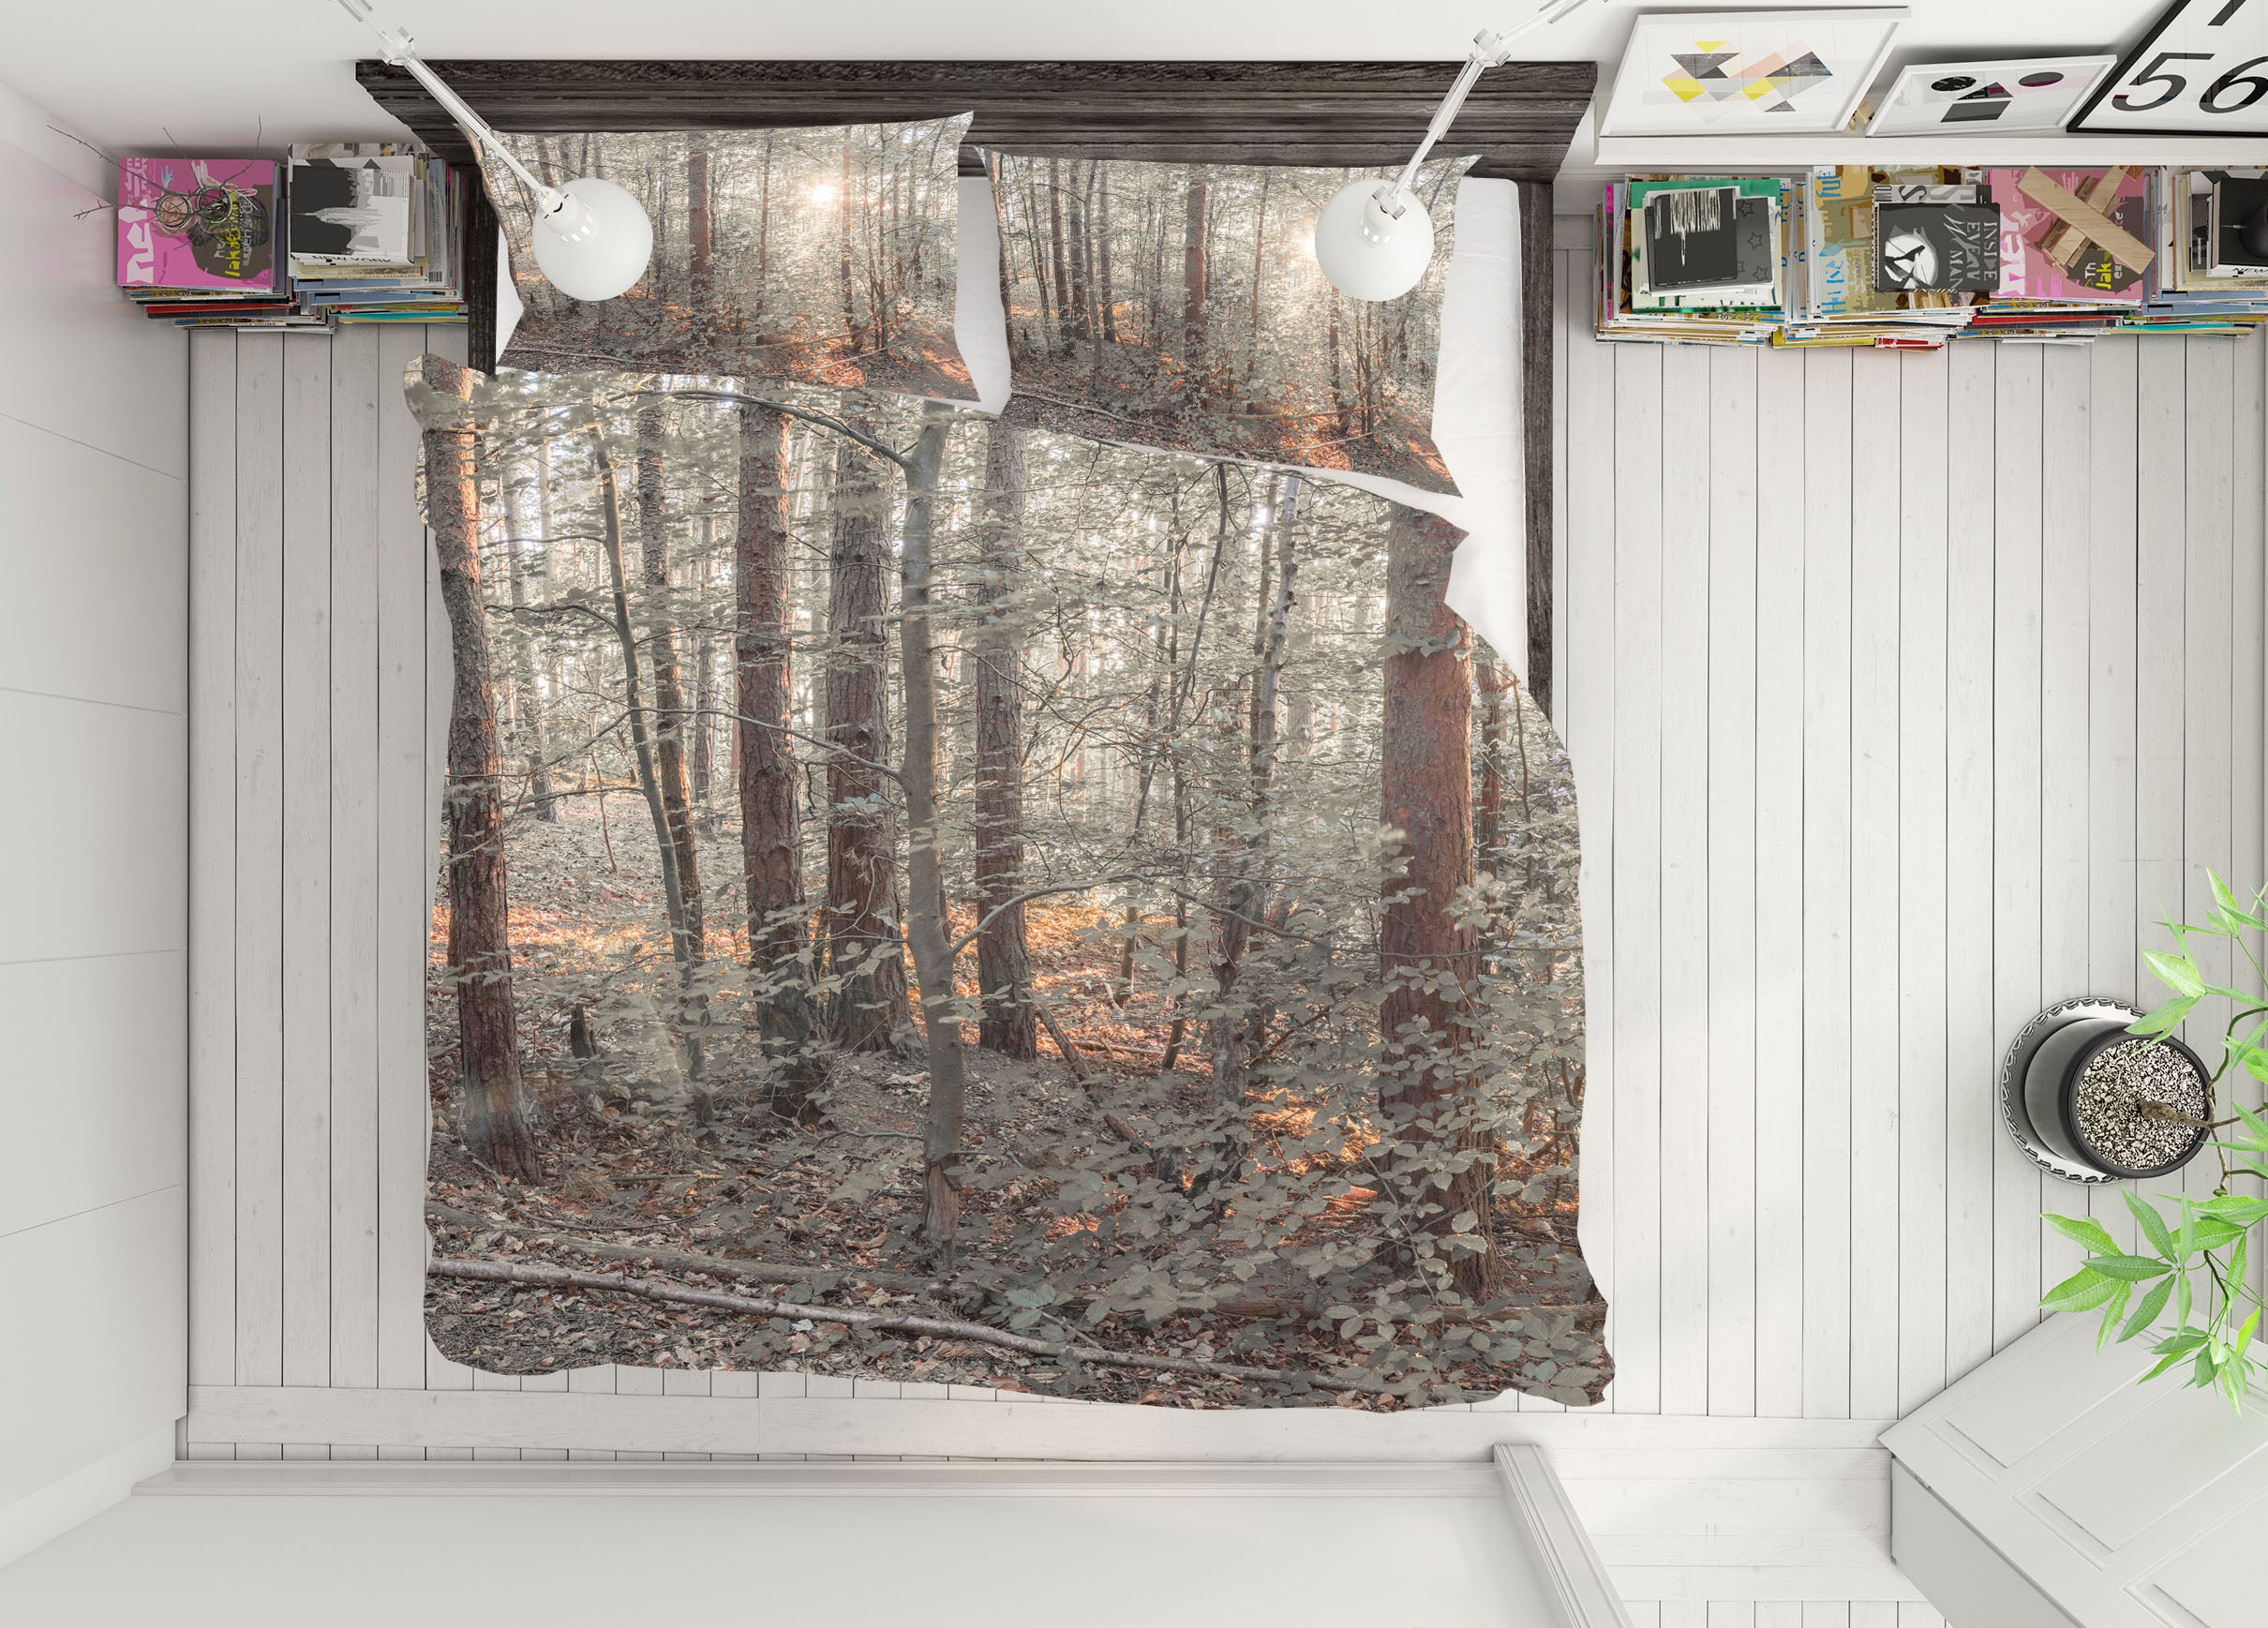 3D Forest Plant 7148 Assaf Frank Bedding Bed Pillowcases Quilt Cover Duvet Cover